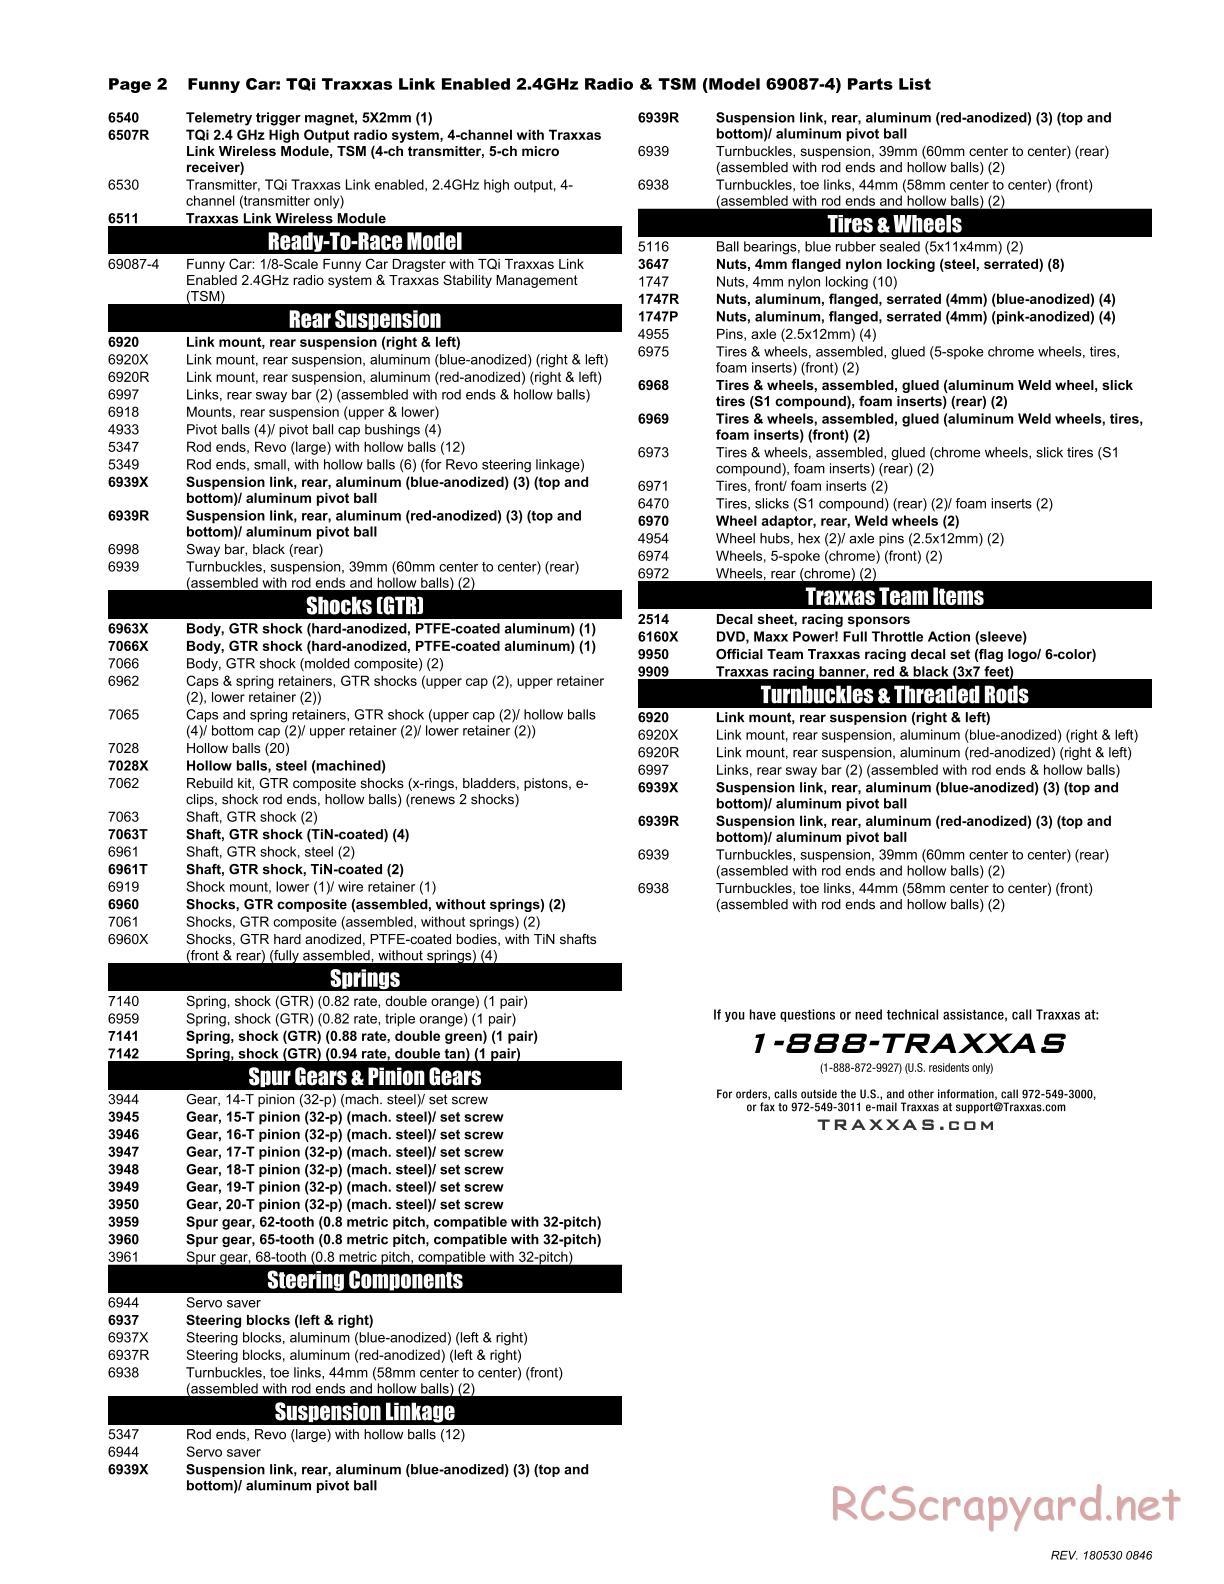 Traxxas - Funny Car SE TSM - Parts List - Page 2